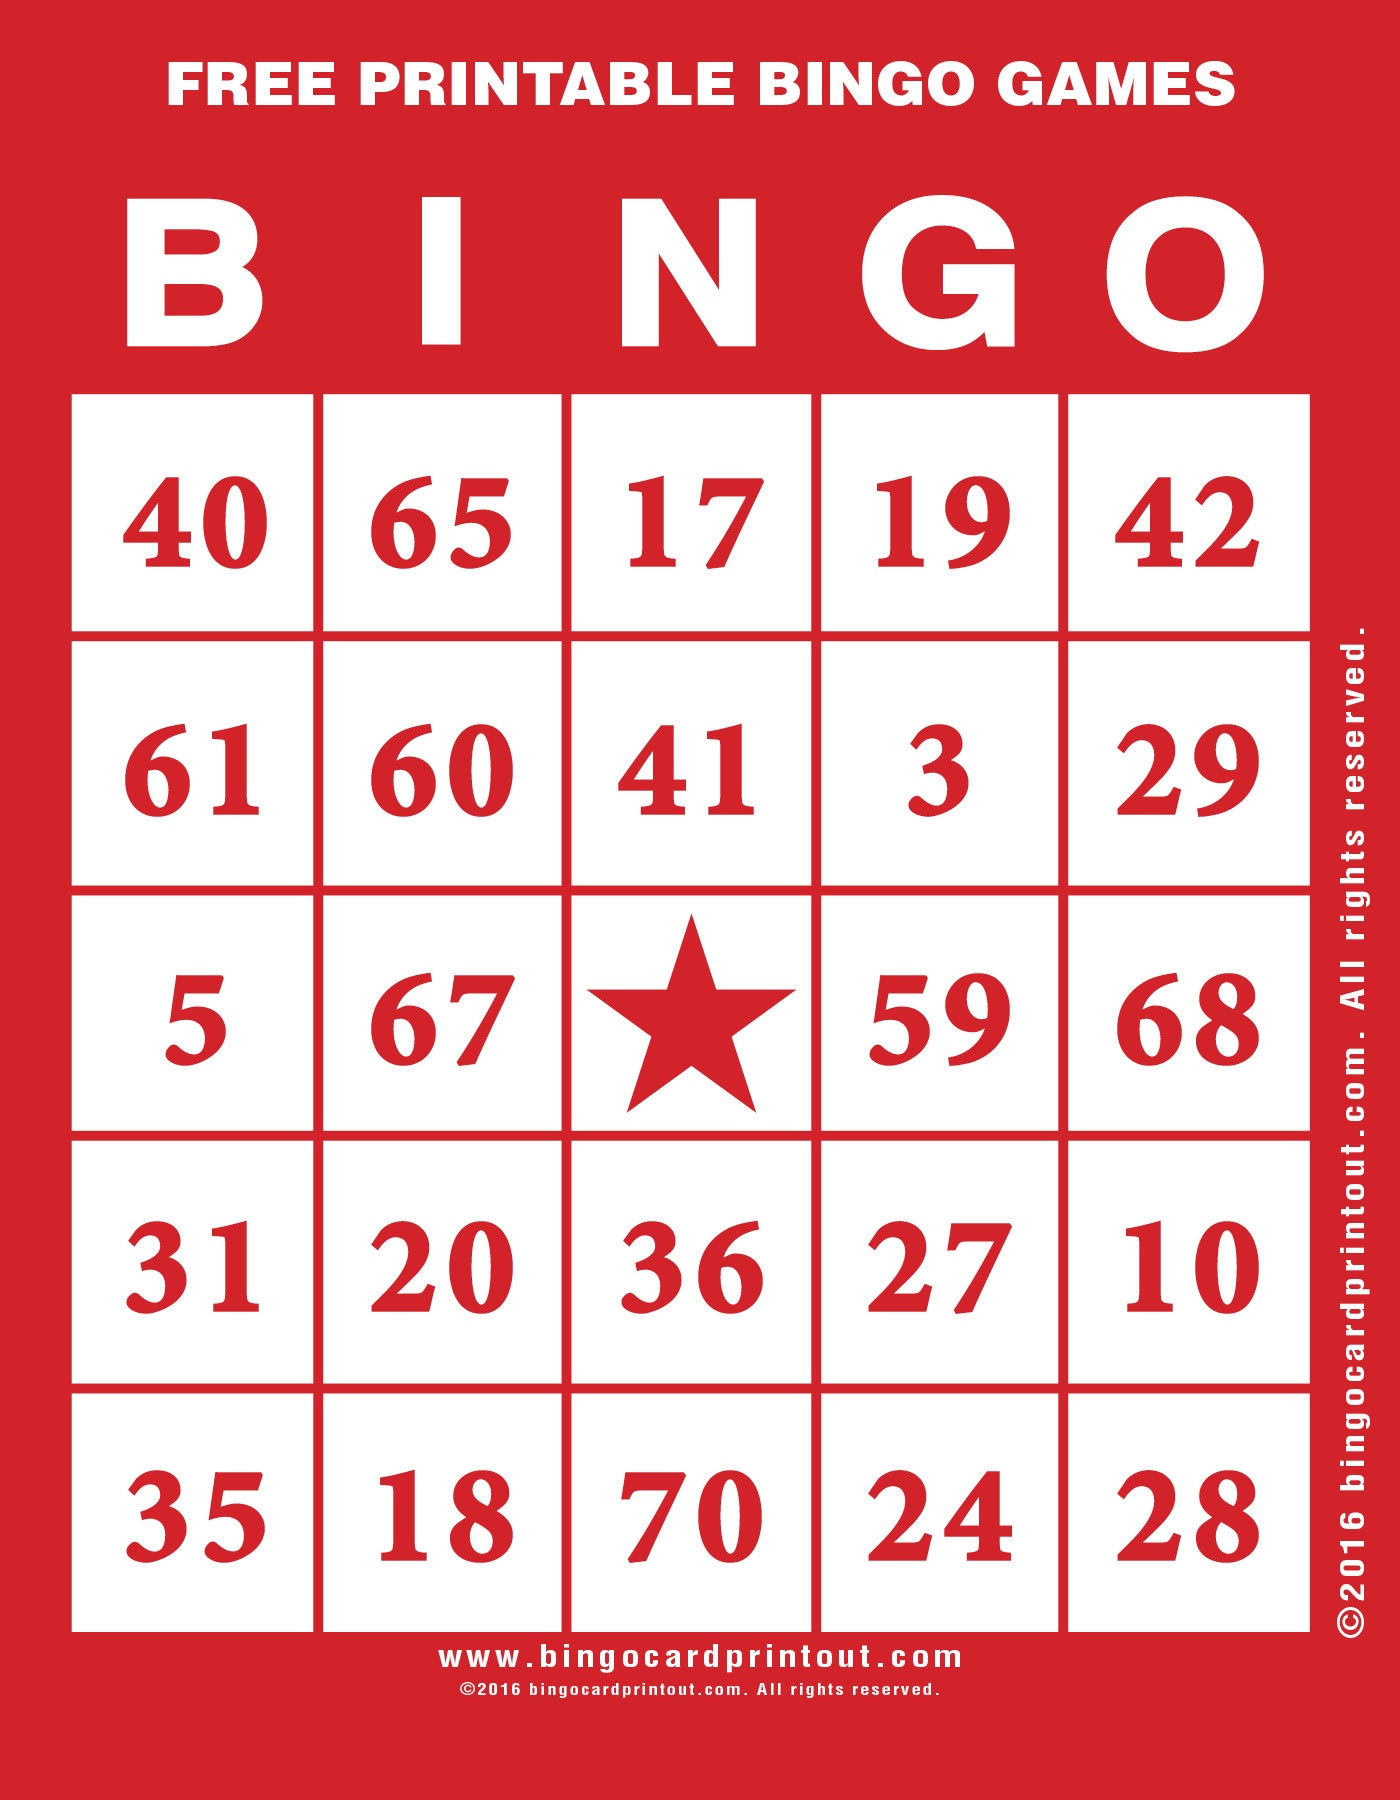 Free Printable Bingo Games - Bingocardprintout - Free Printable Bingo Games